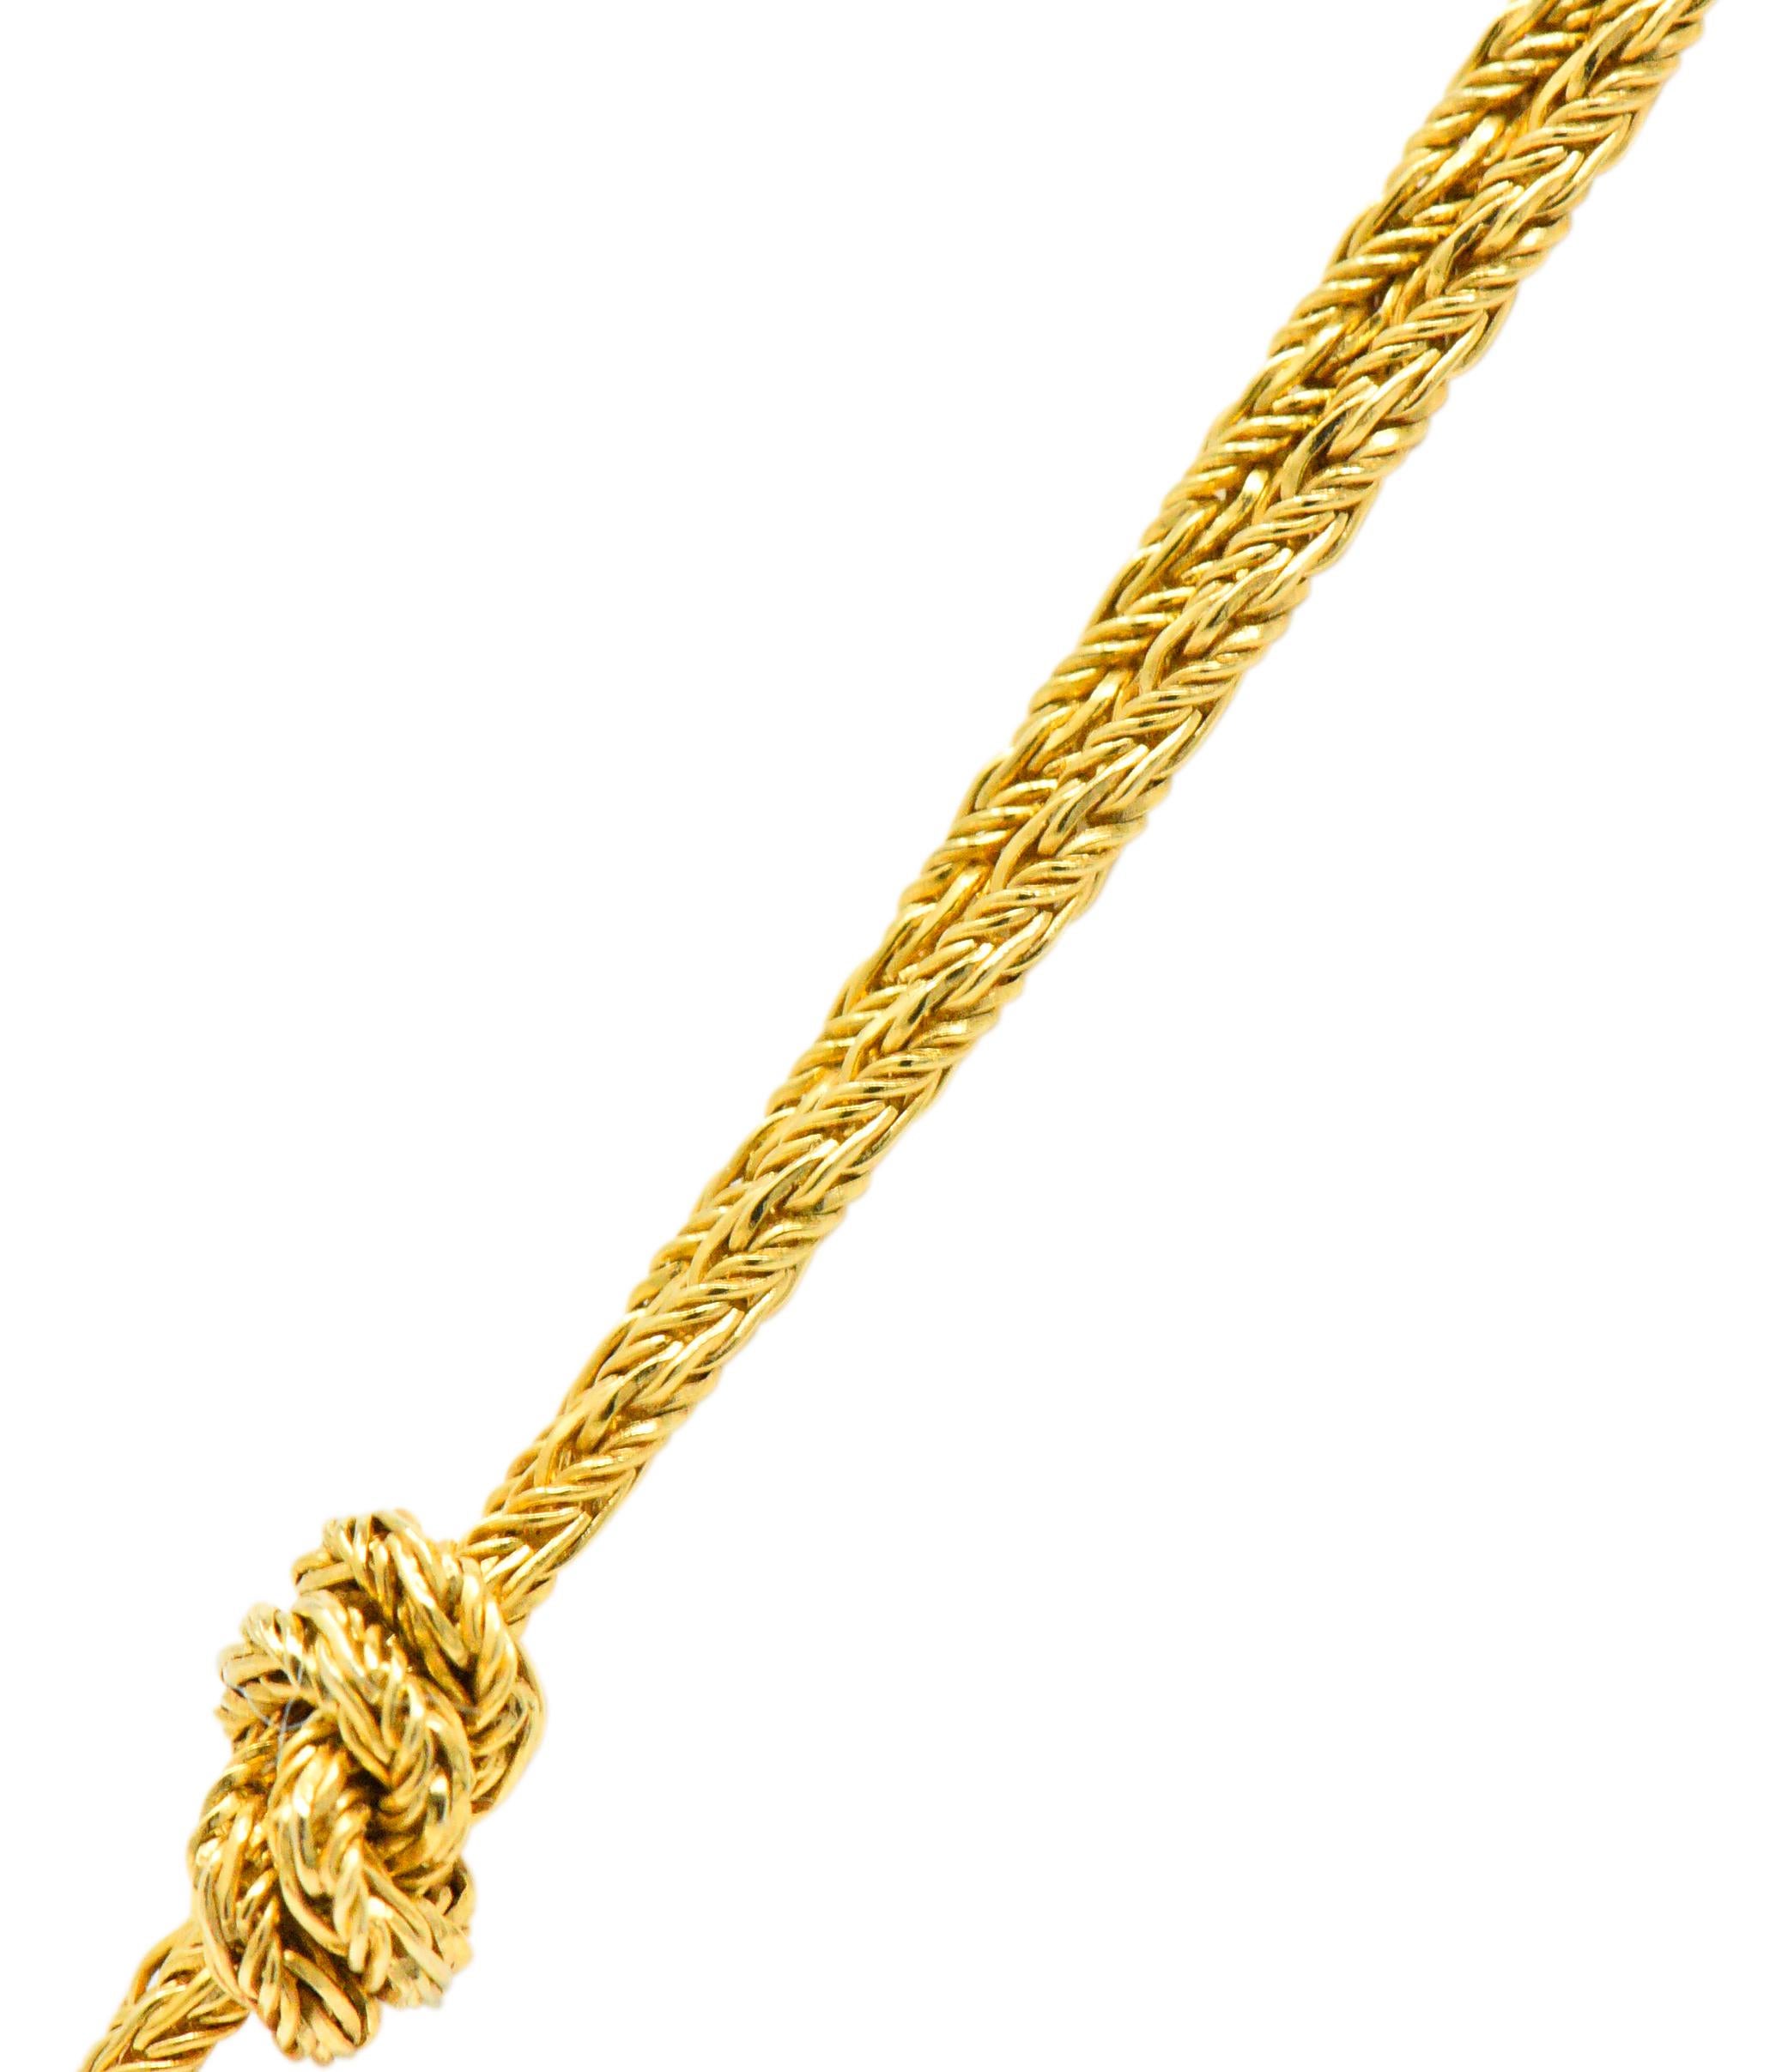 tiffany & co knot necklace